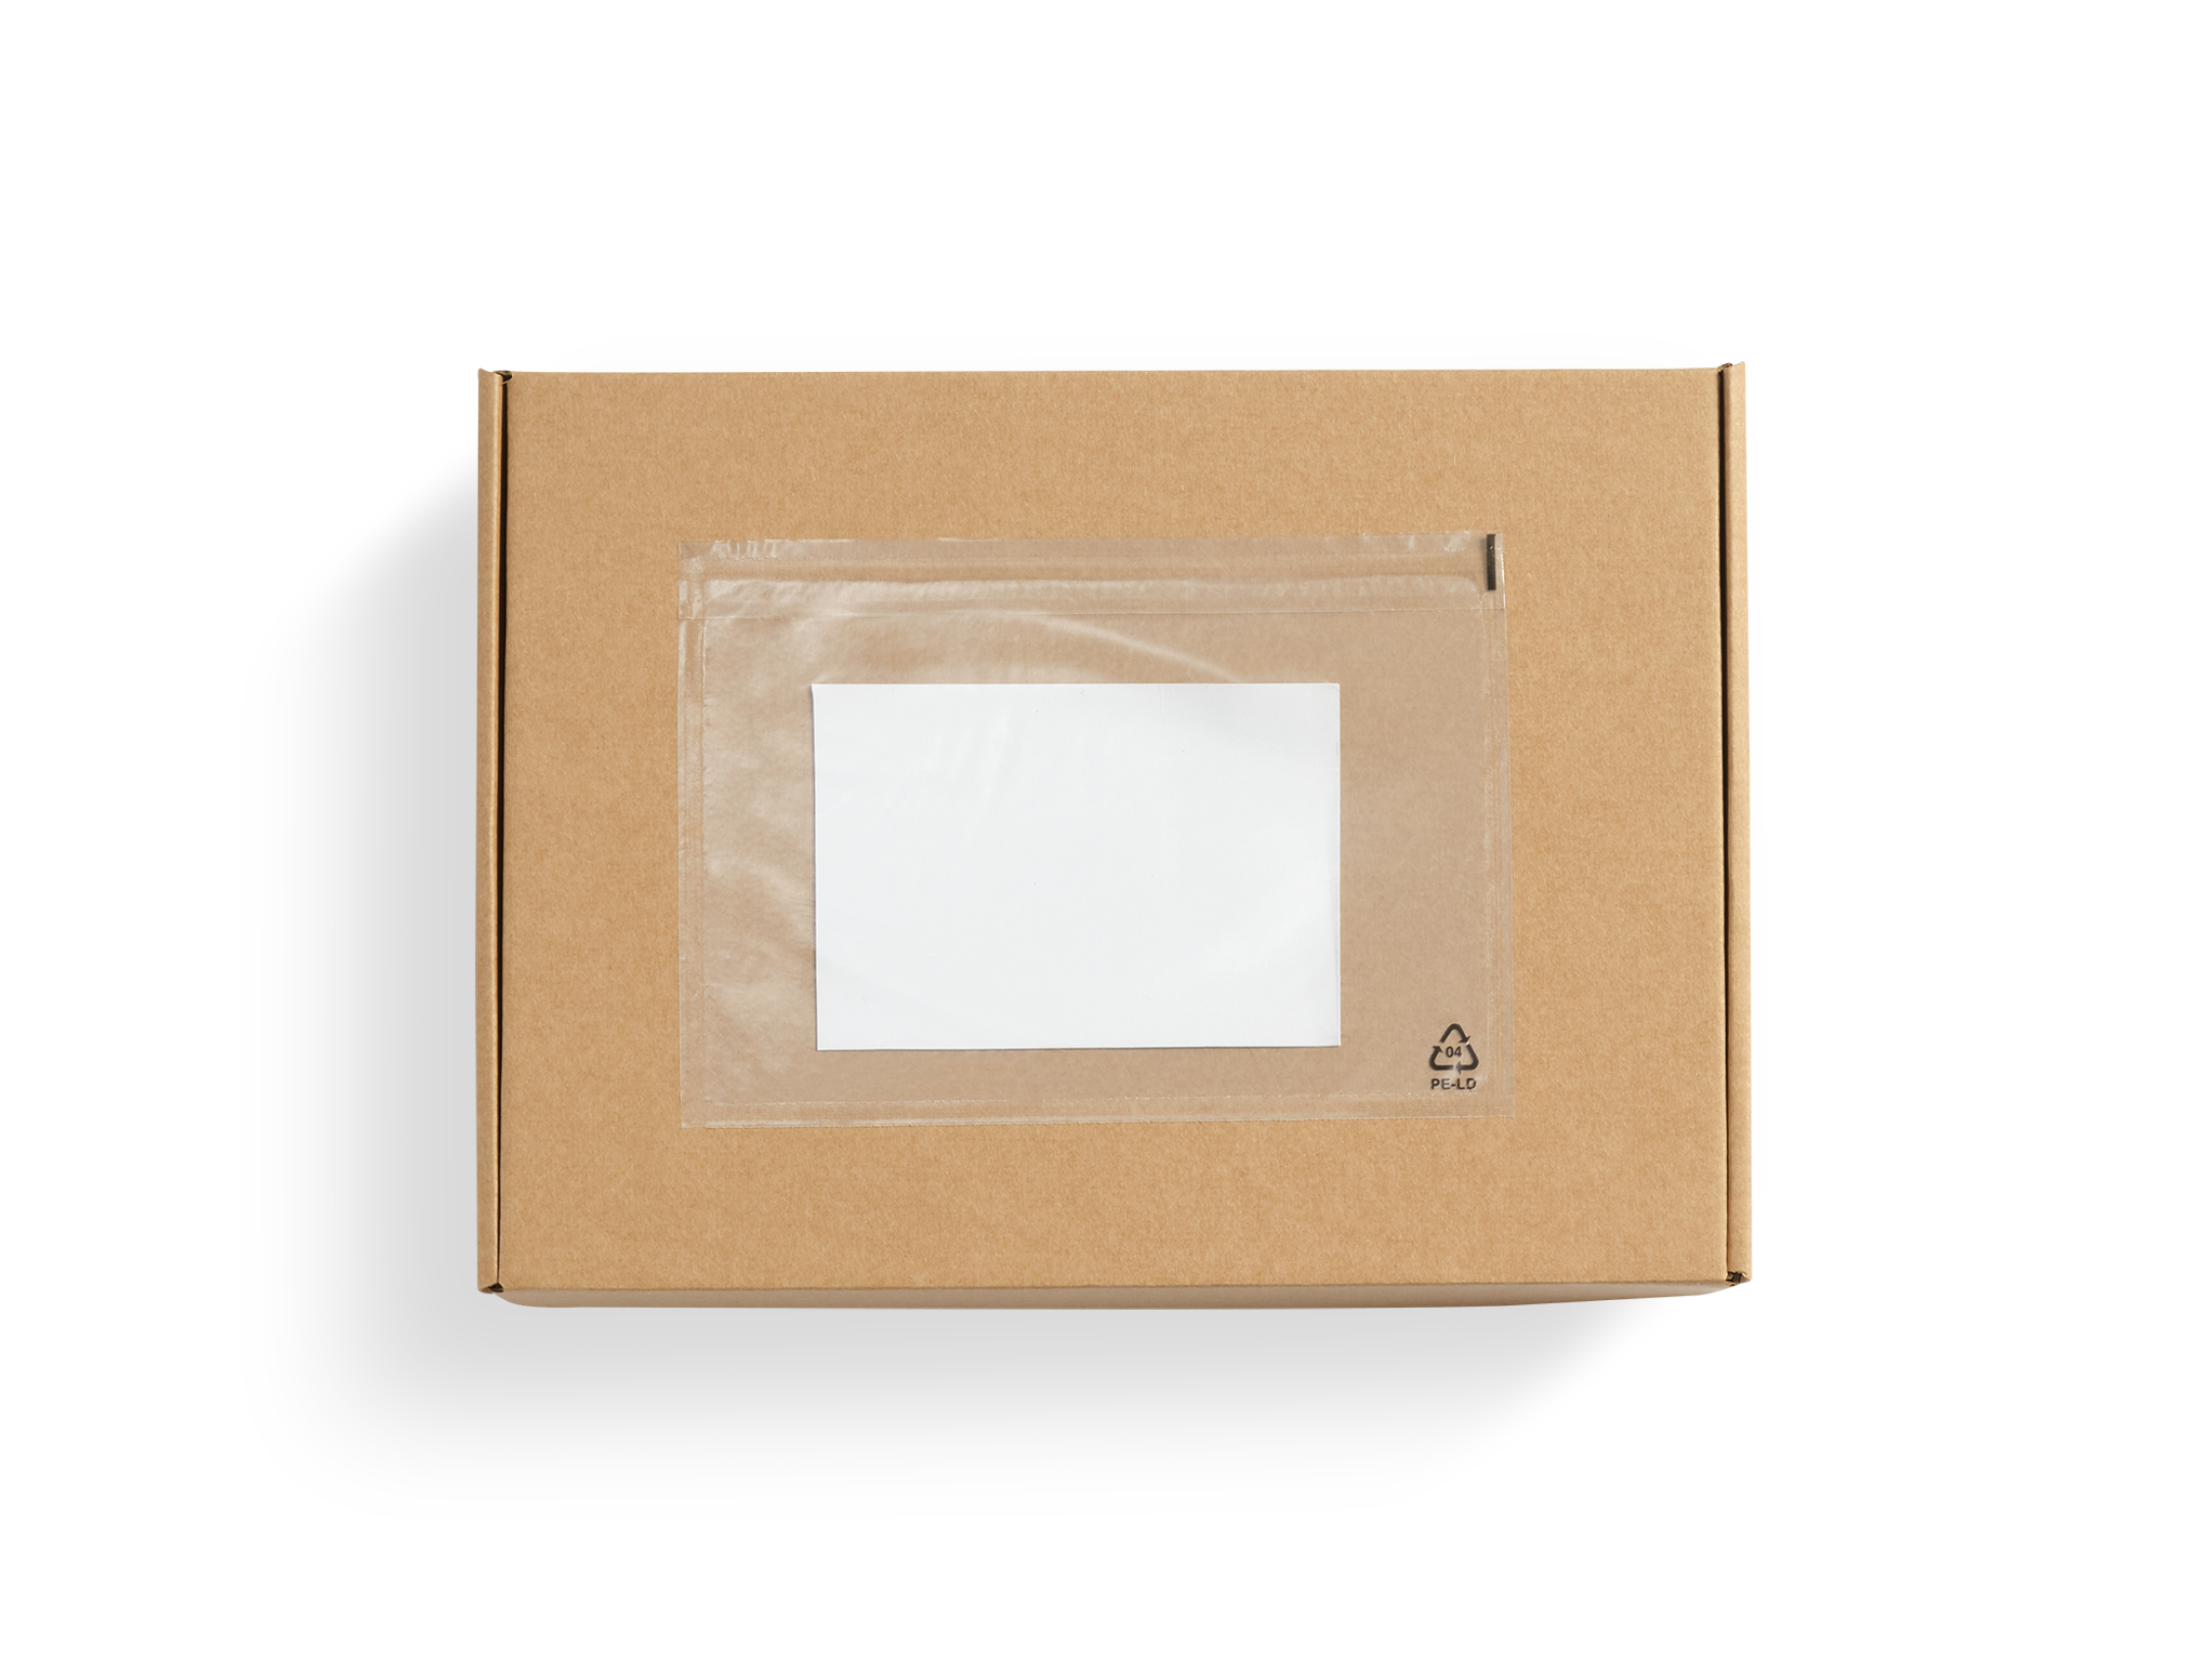 Self-adhesive envelope